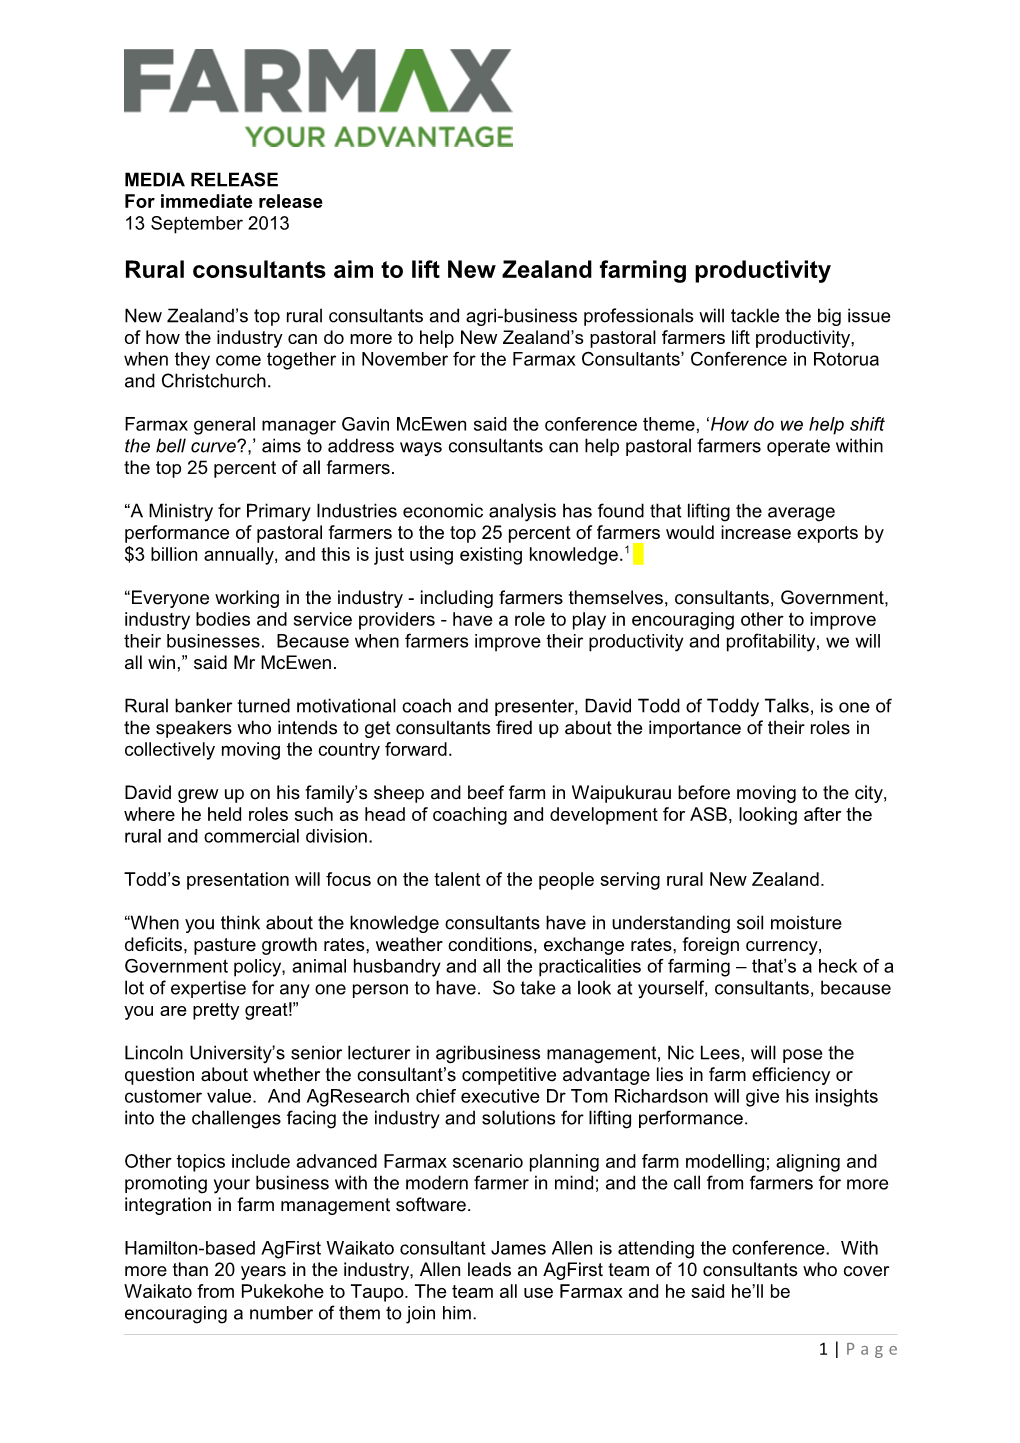 Rural Consultants Aim to Lift New Zealand Farming Productivity